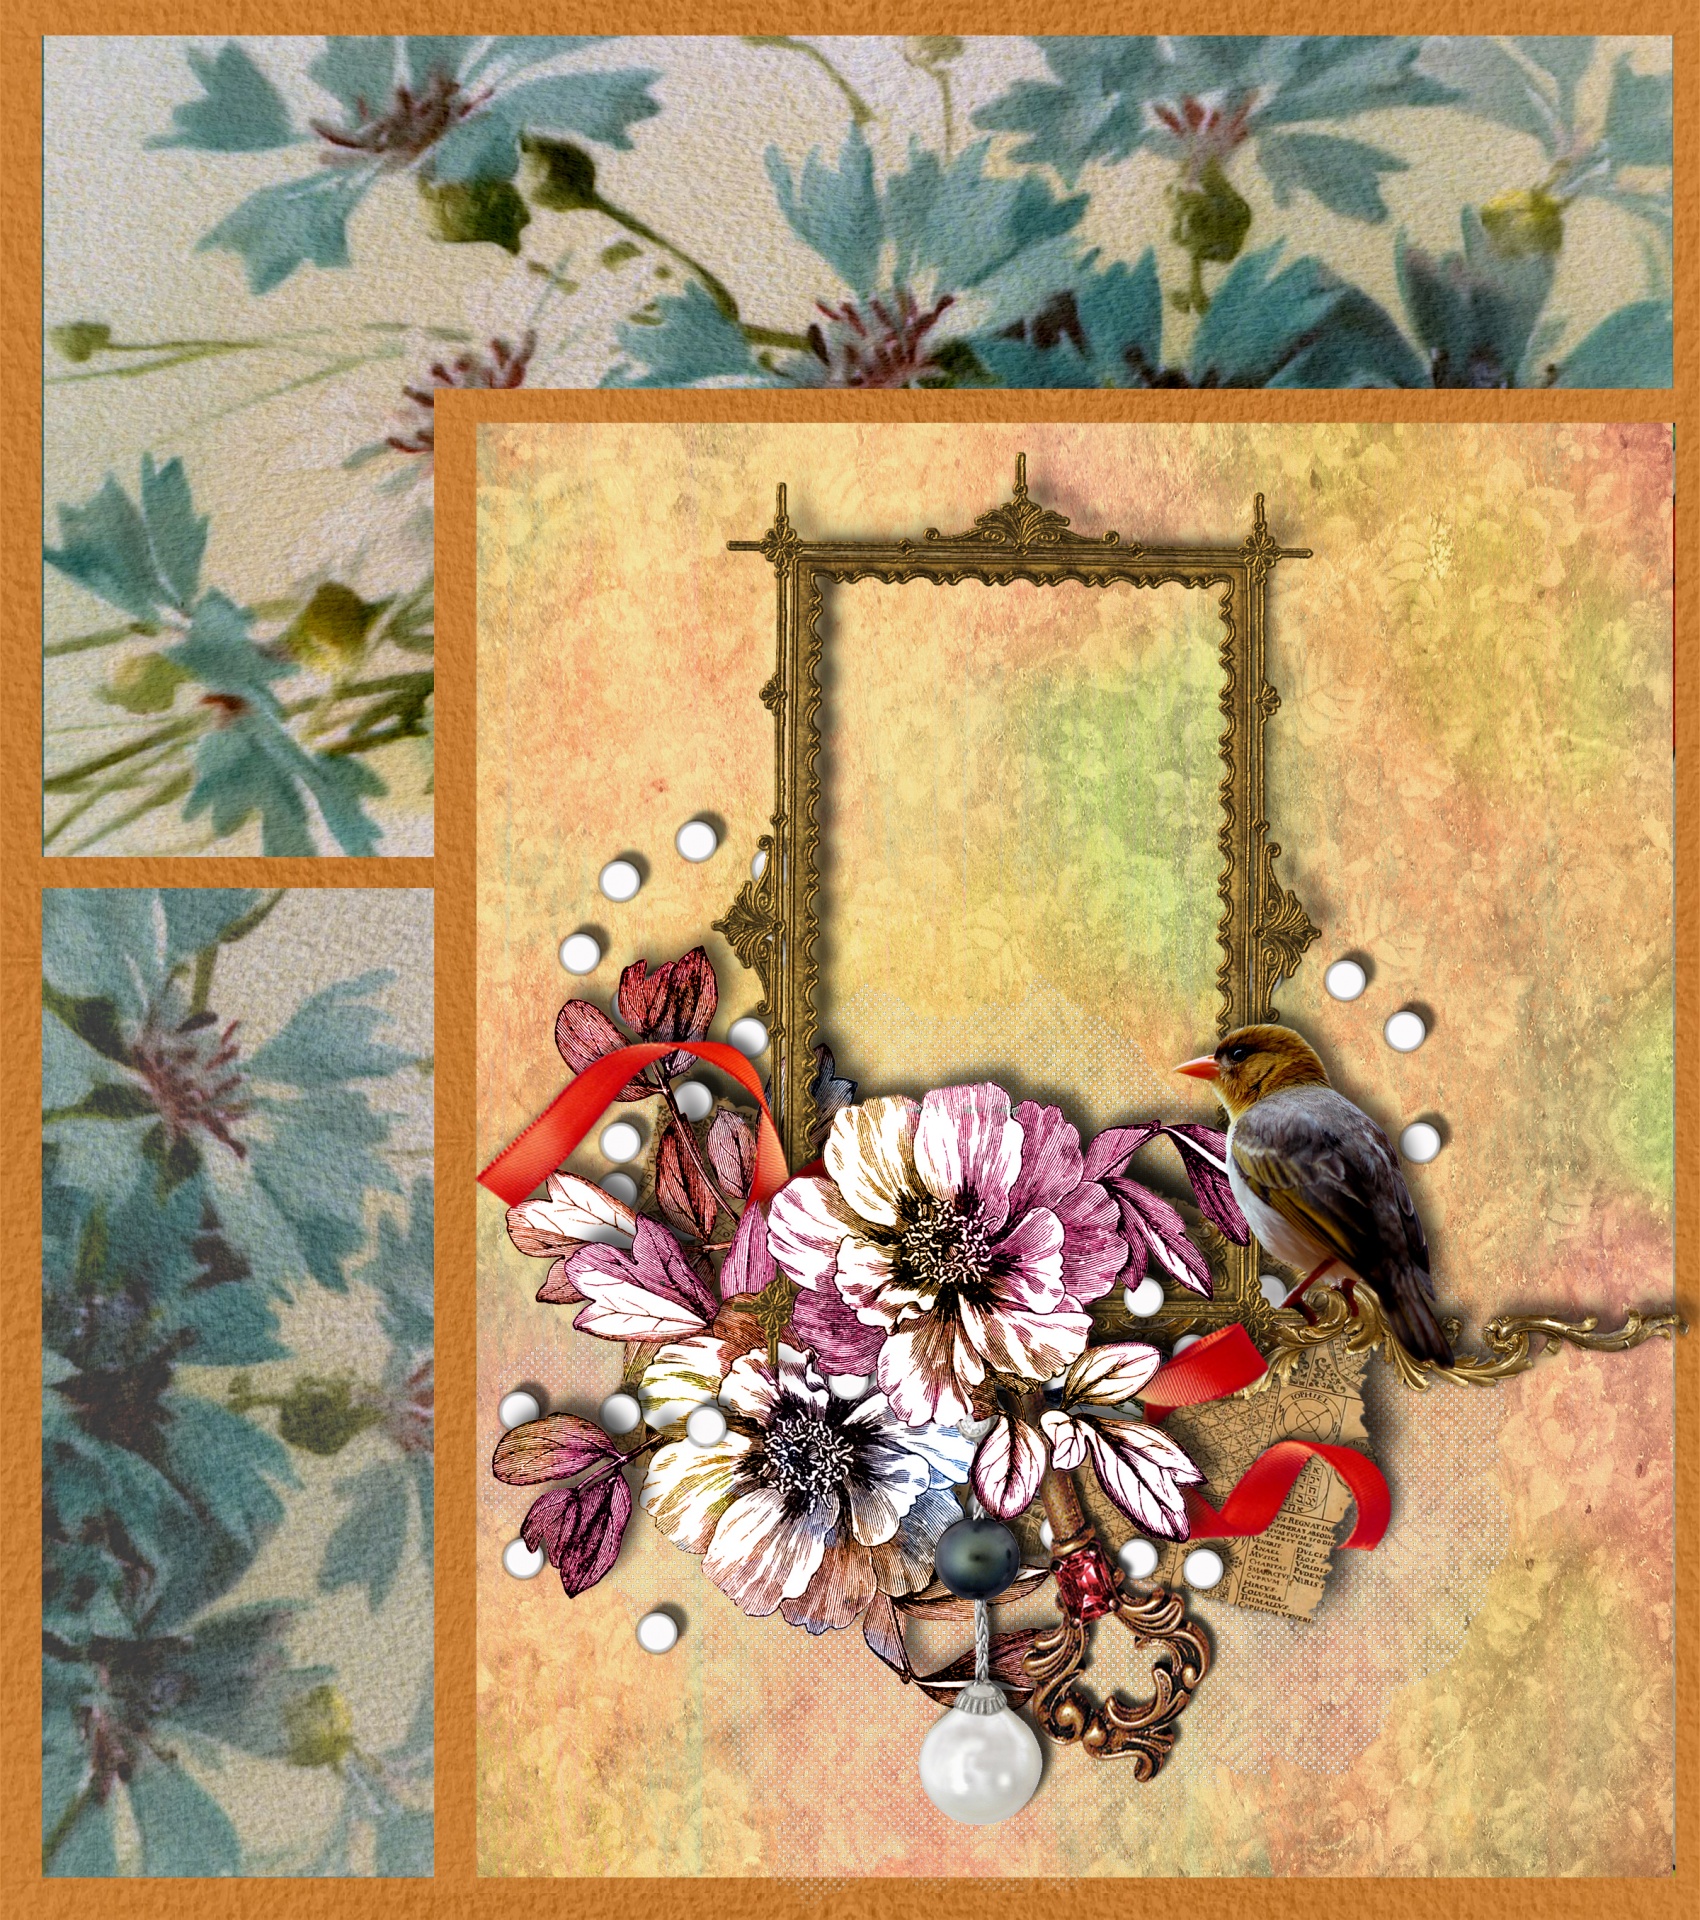 Lovely vintage floral frame with bird